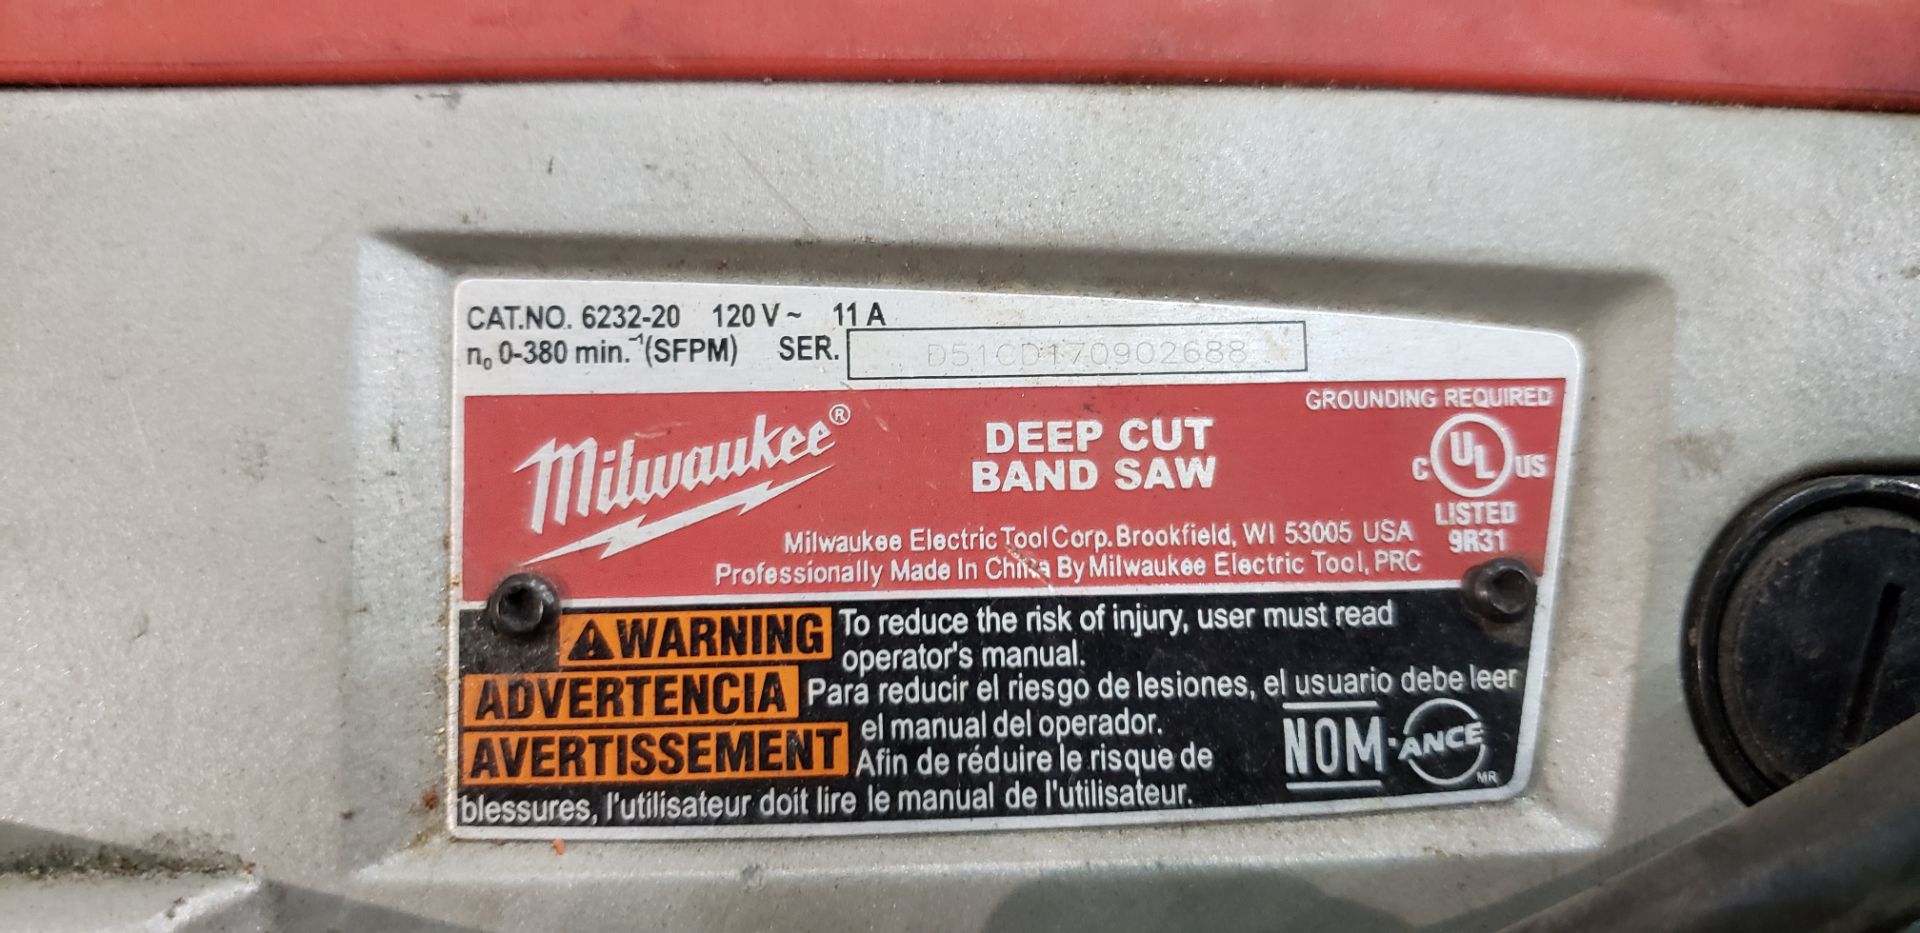 Milwaukee 6232-20 Deep Cut Band Saw - Image 2 of 2